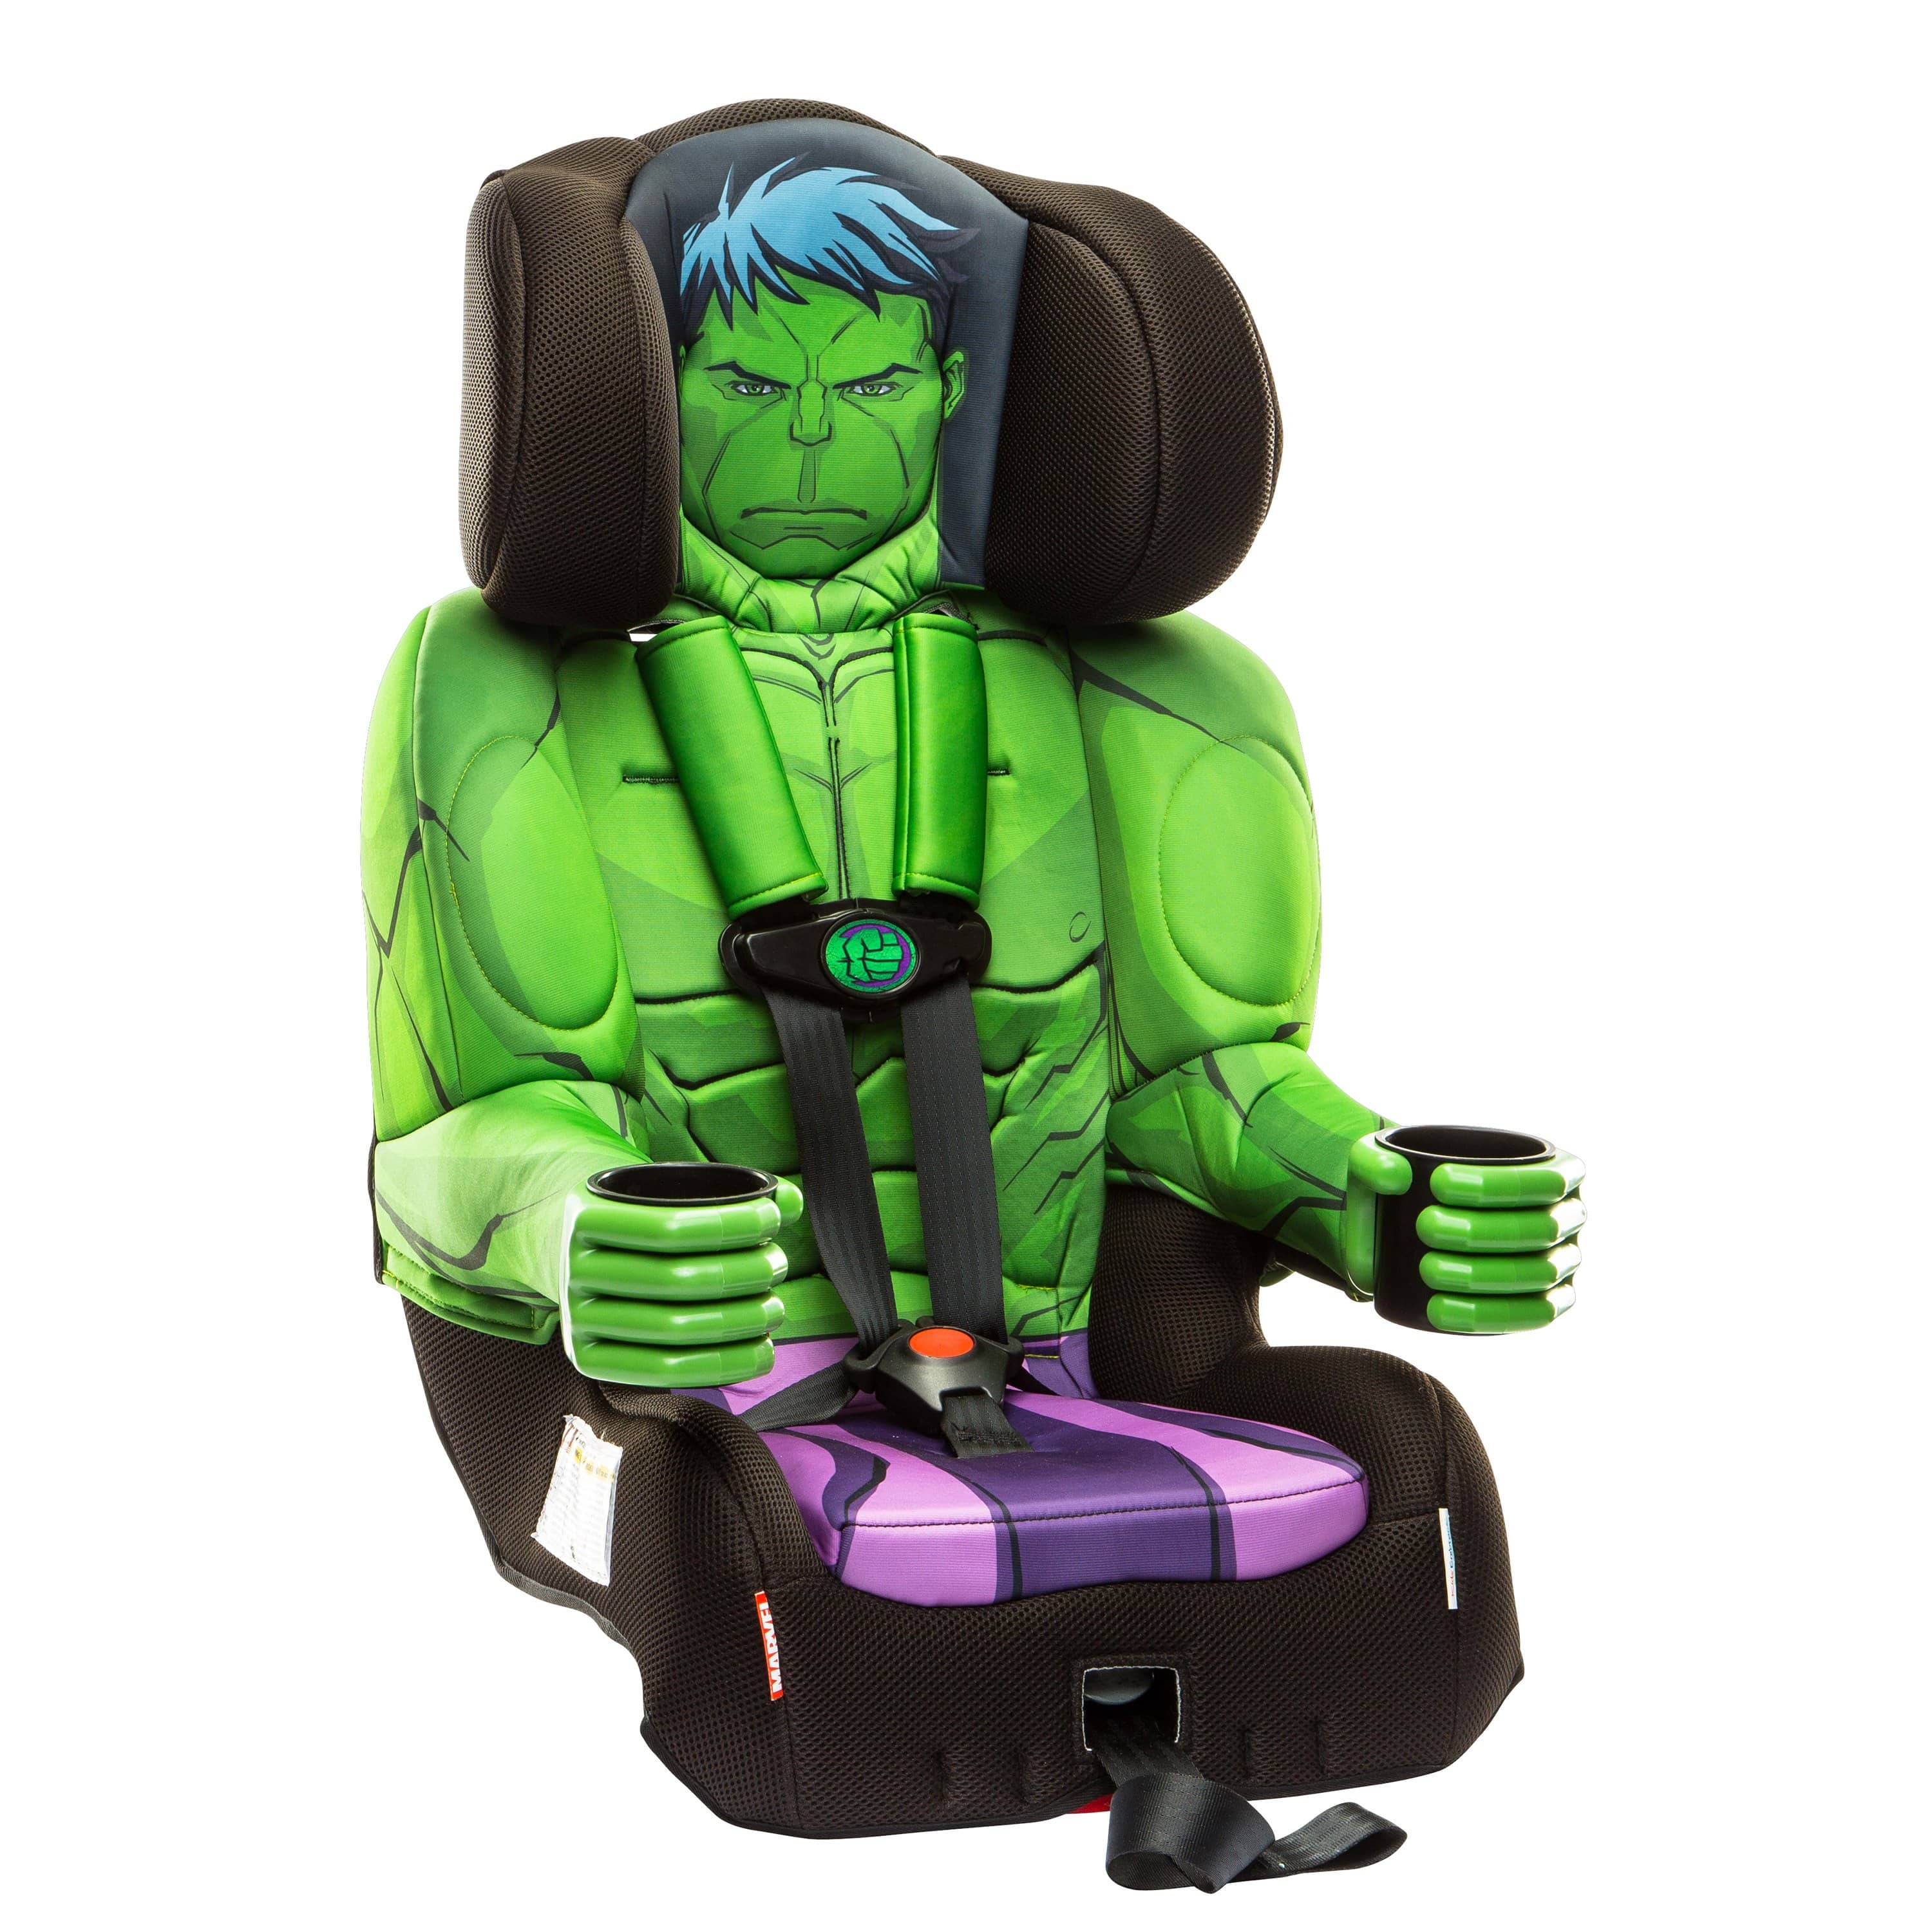 Incredible Hulk 2-in-1 Harness Booster Car Seat